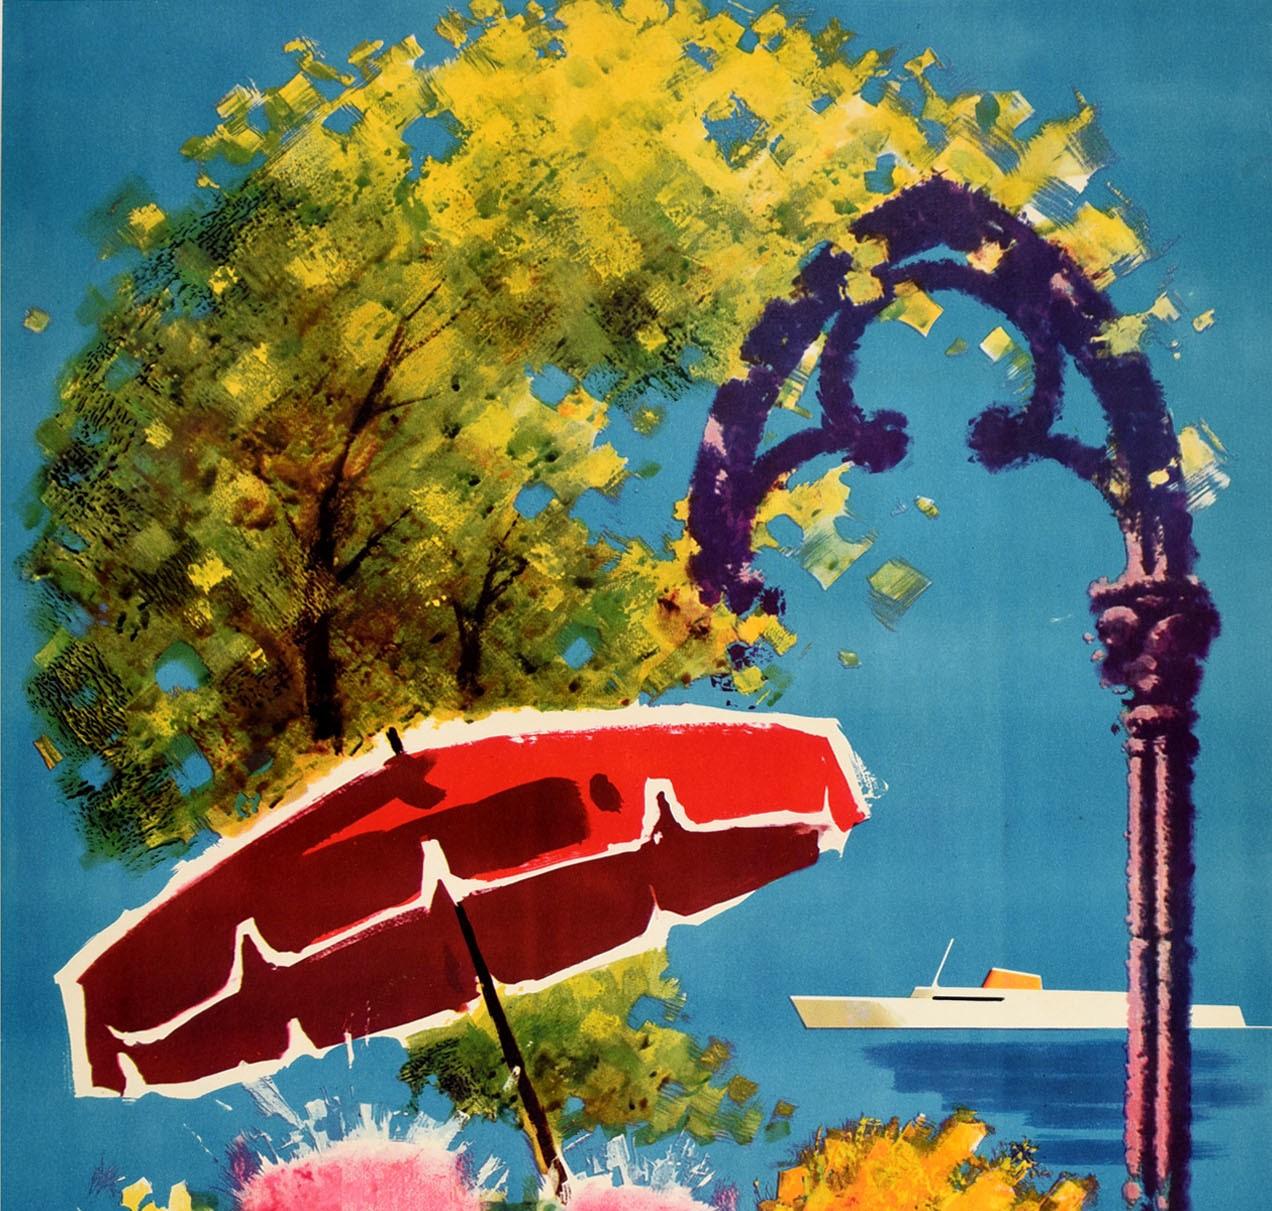 Original Vintage Poster Barcelona Spain Travel Art Flowers Ship Design Tourism - Print by Domenech